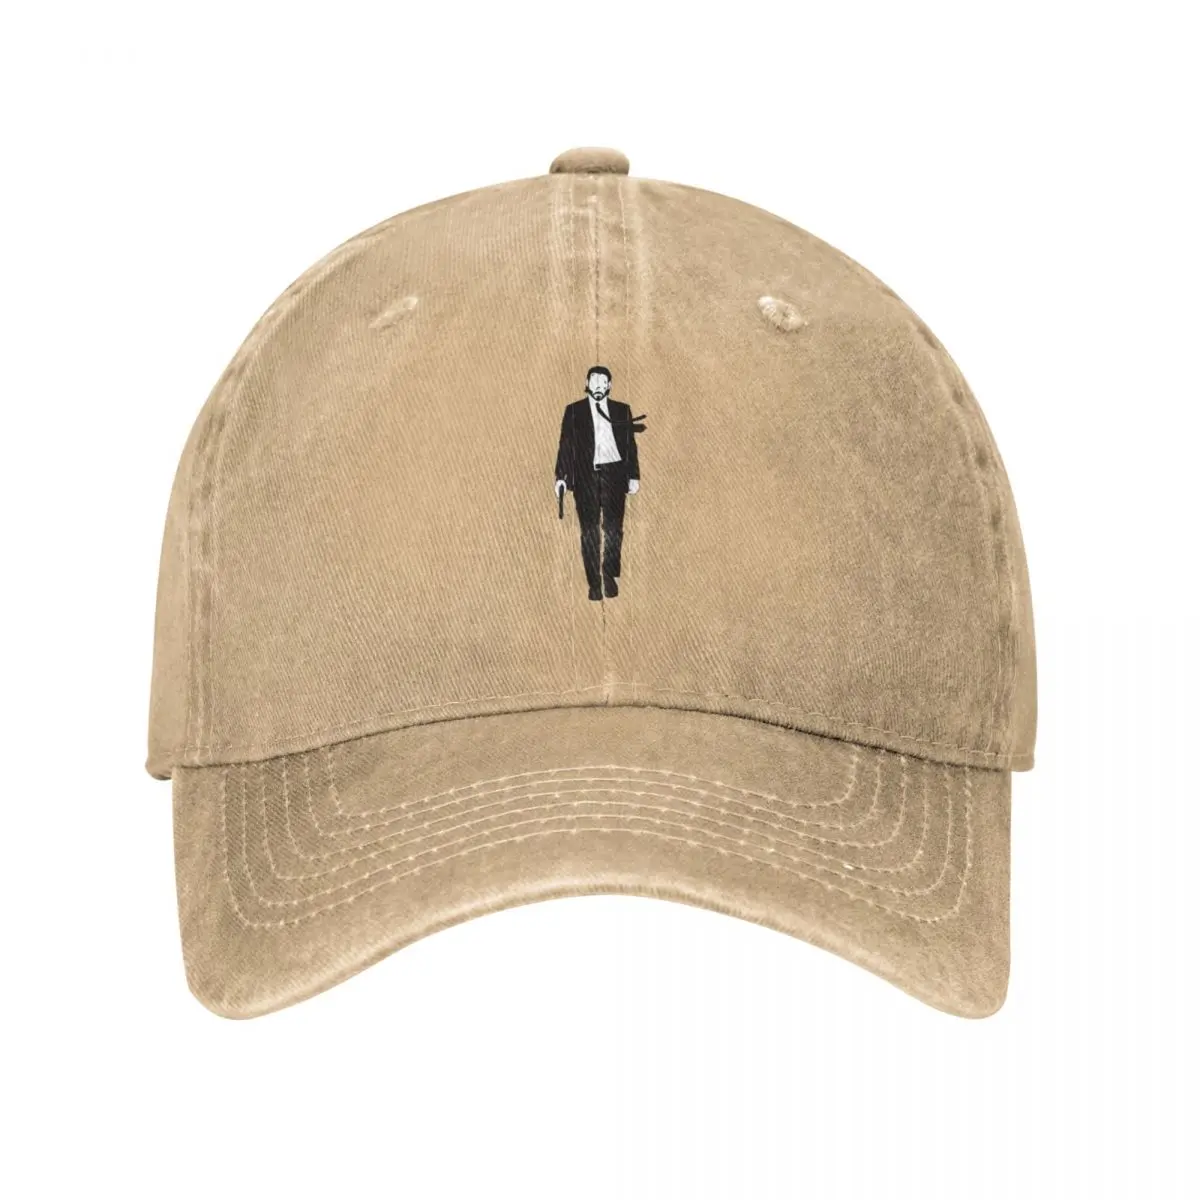 

John Wick Cap Cowboy Hat golf hat Brand man caps baseball Caps male Women's